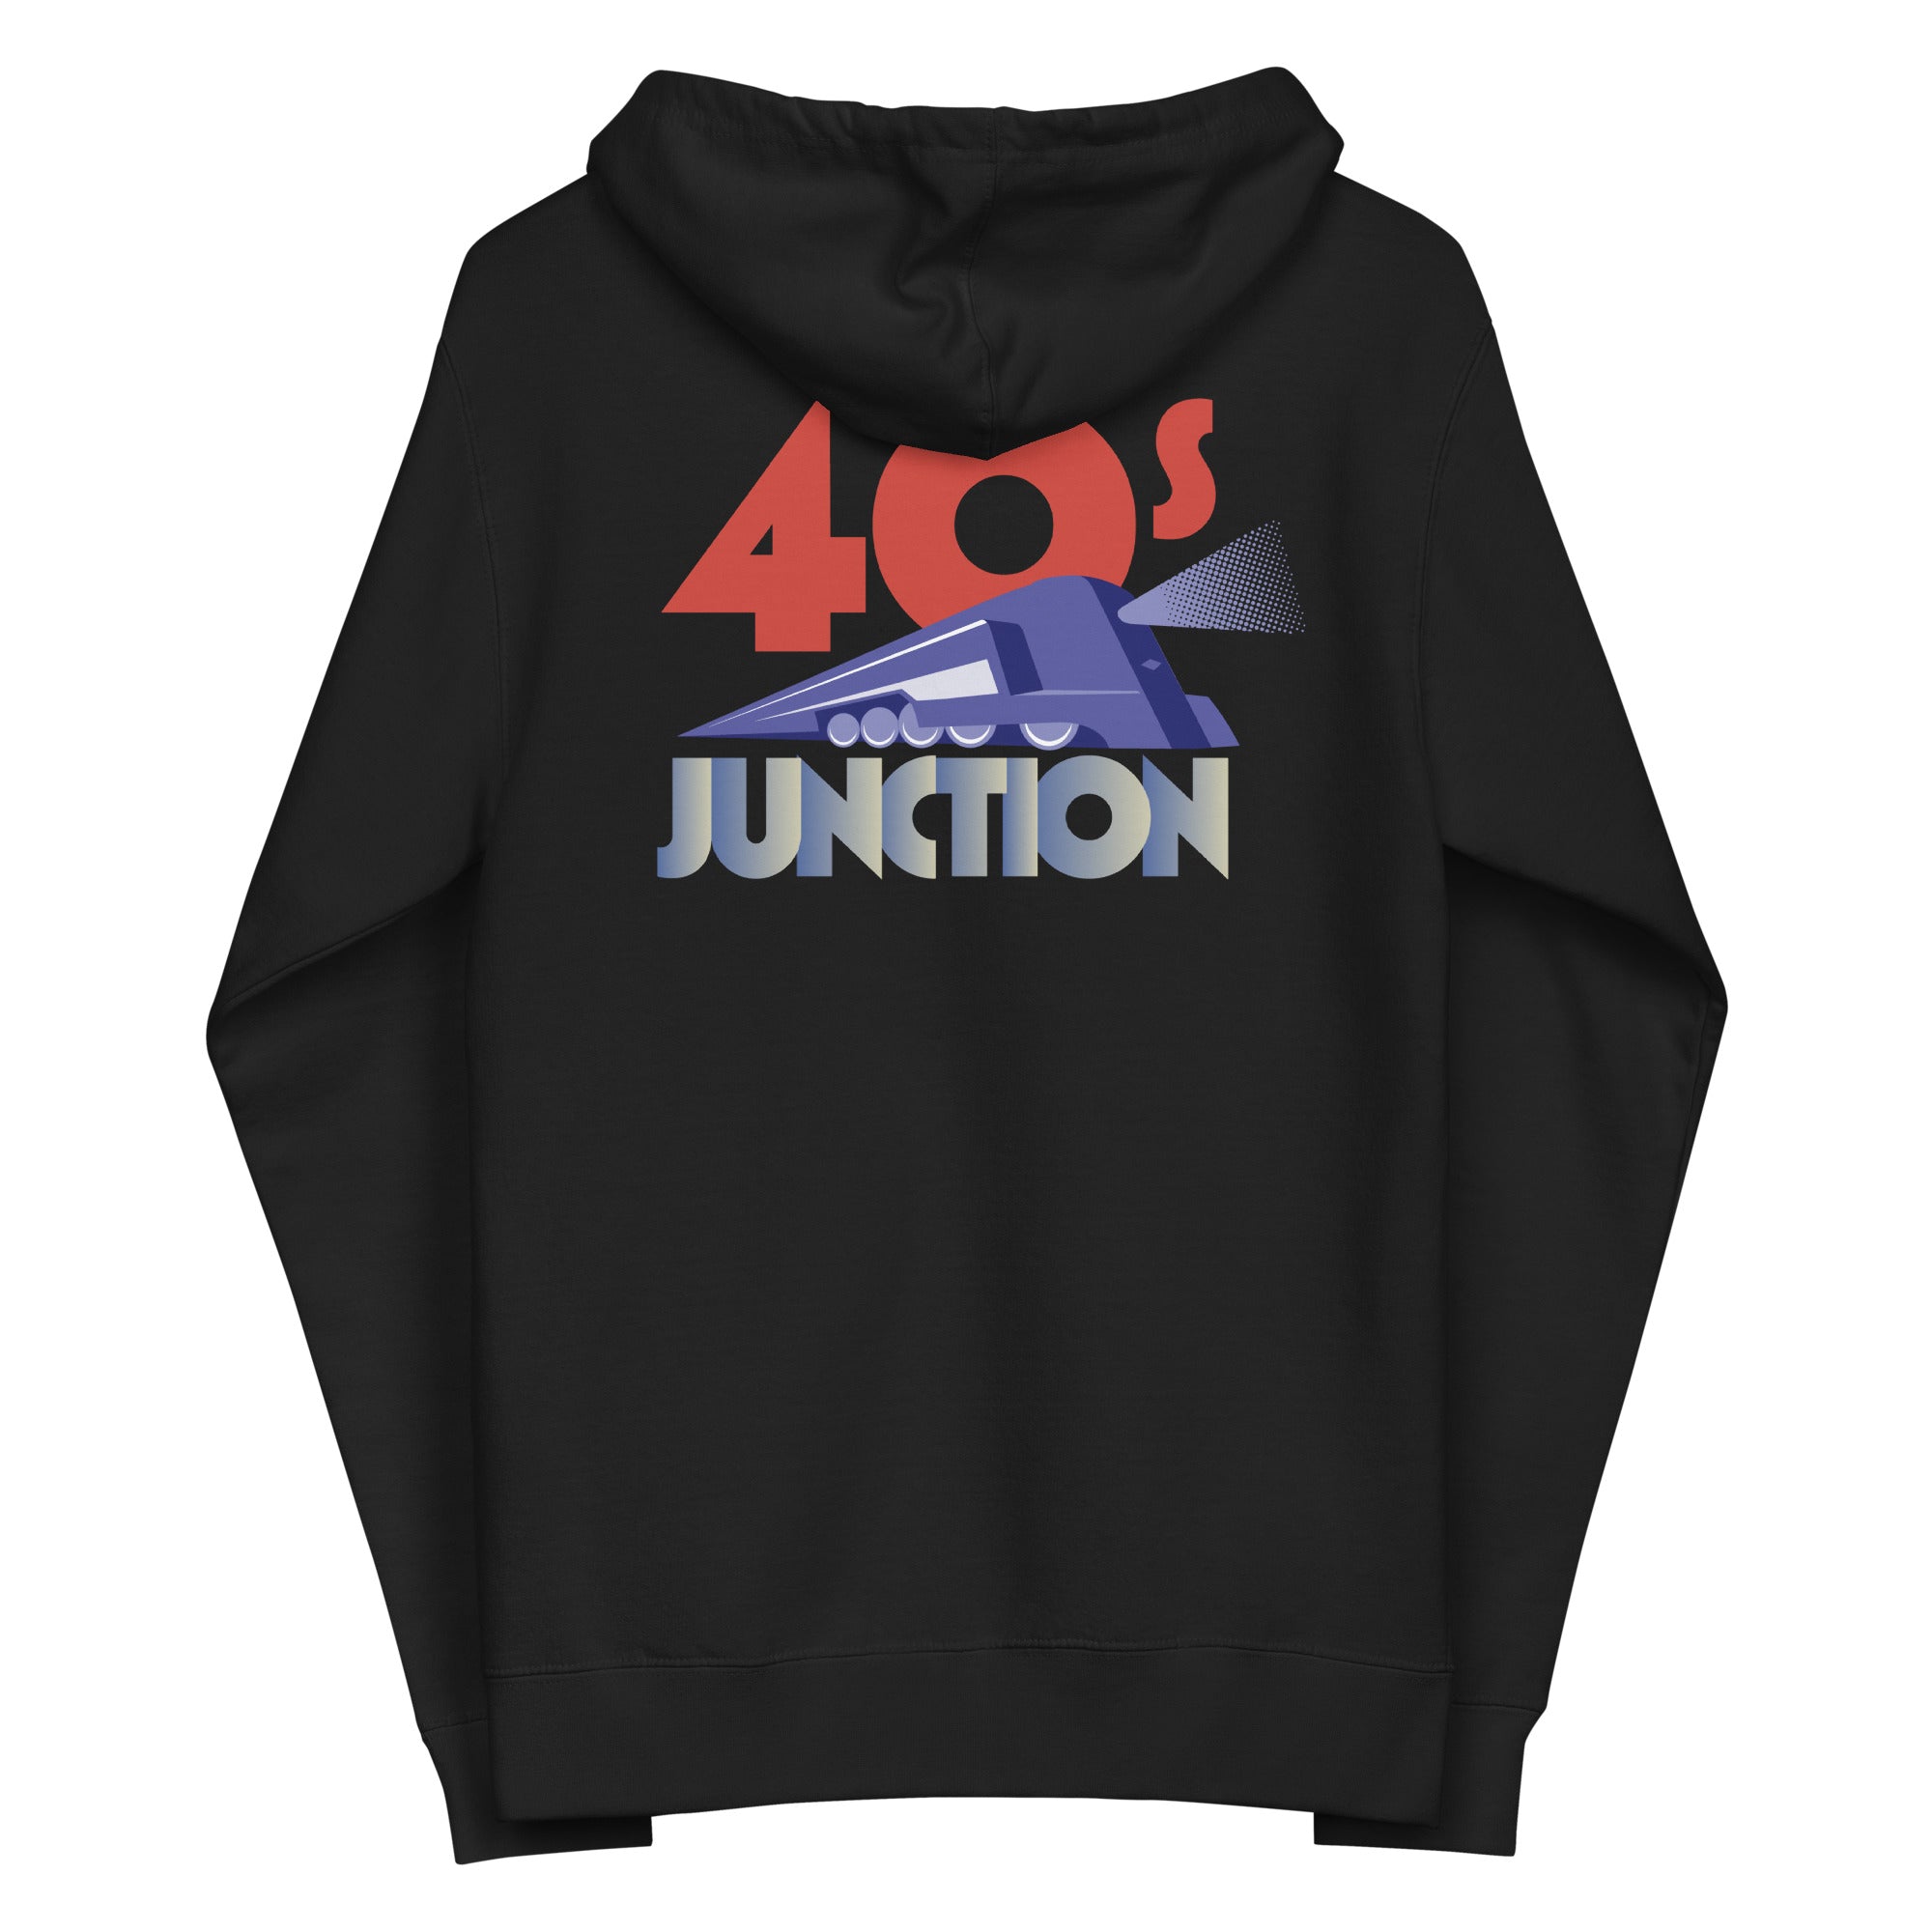 40s Junction: Zip Hoodie